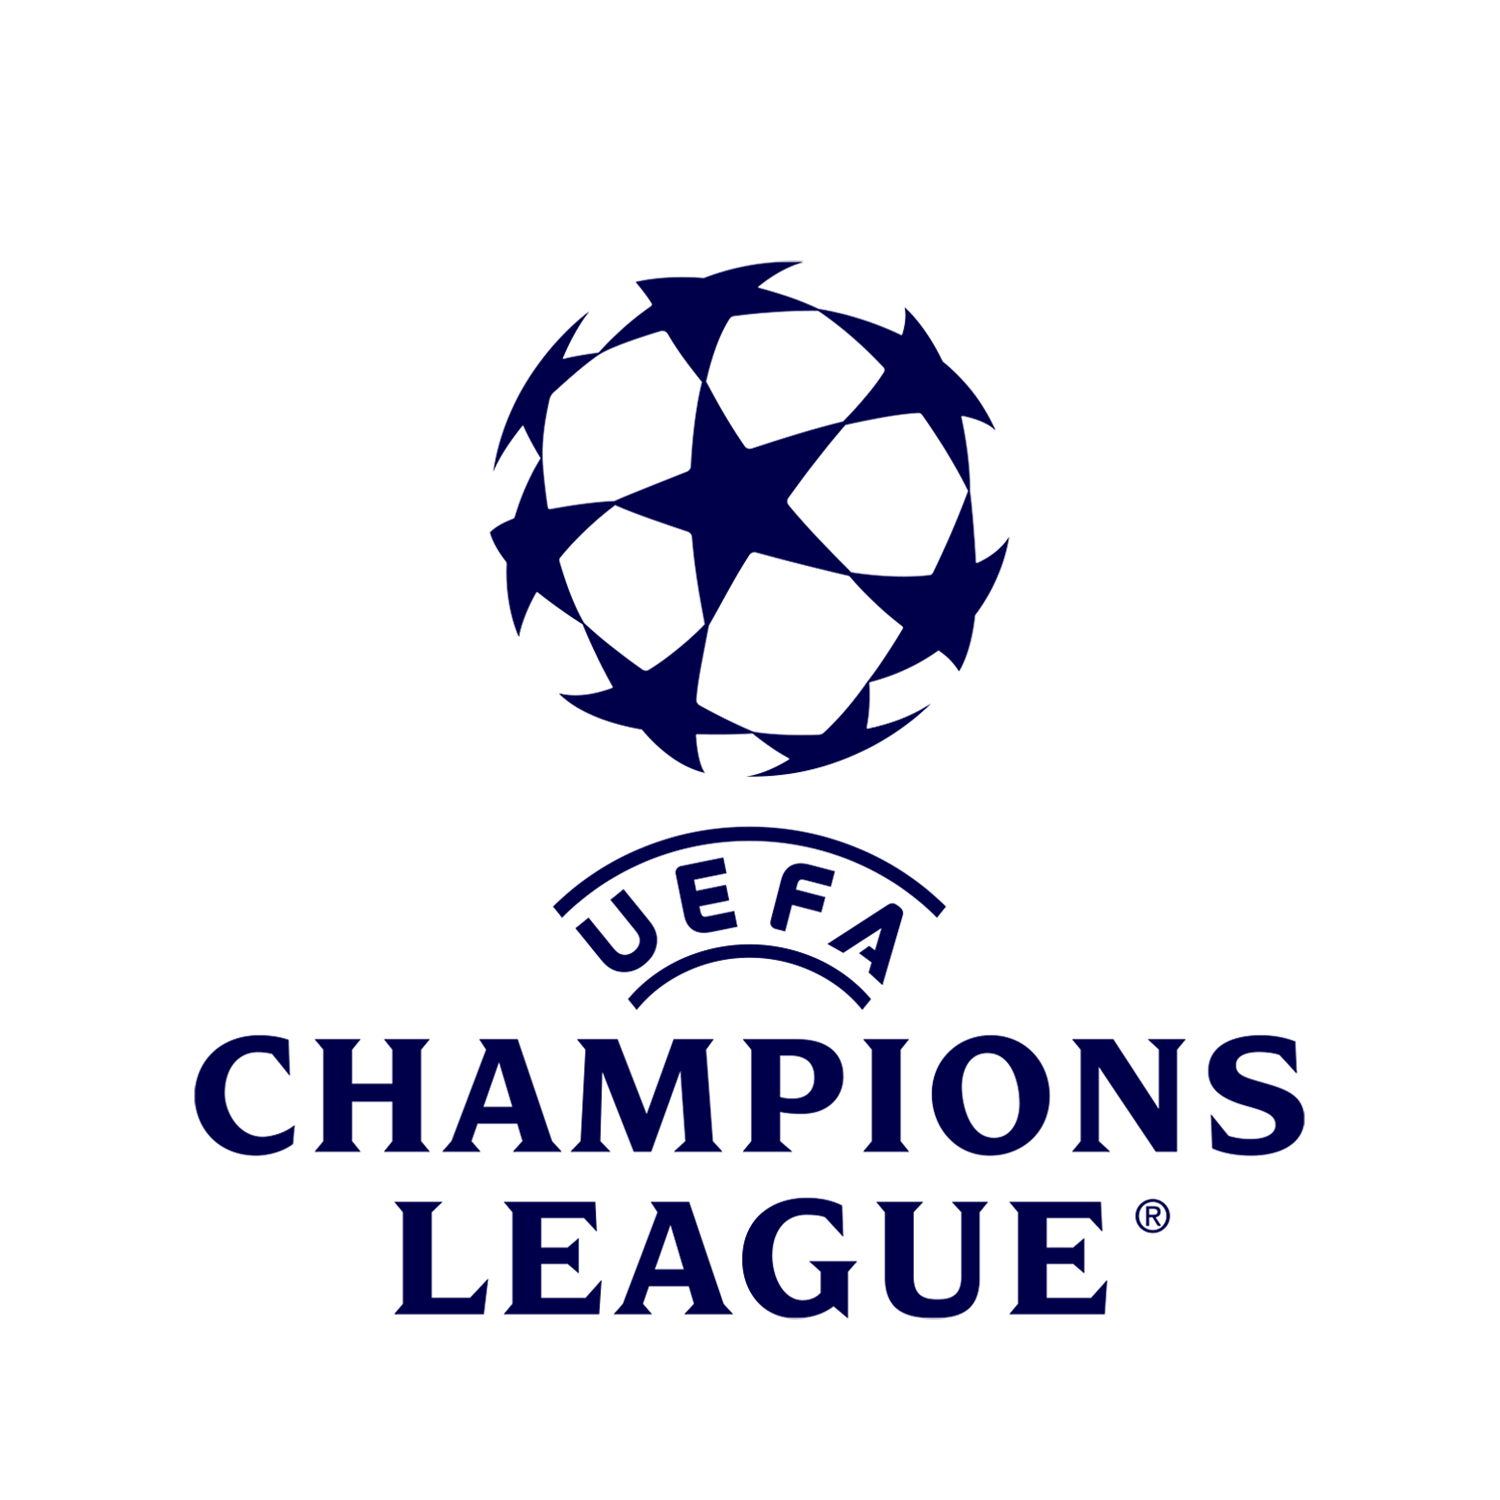 UEFA Champions League Accessories